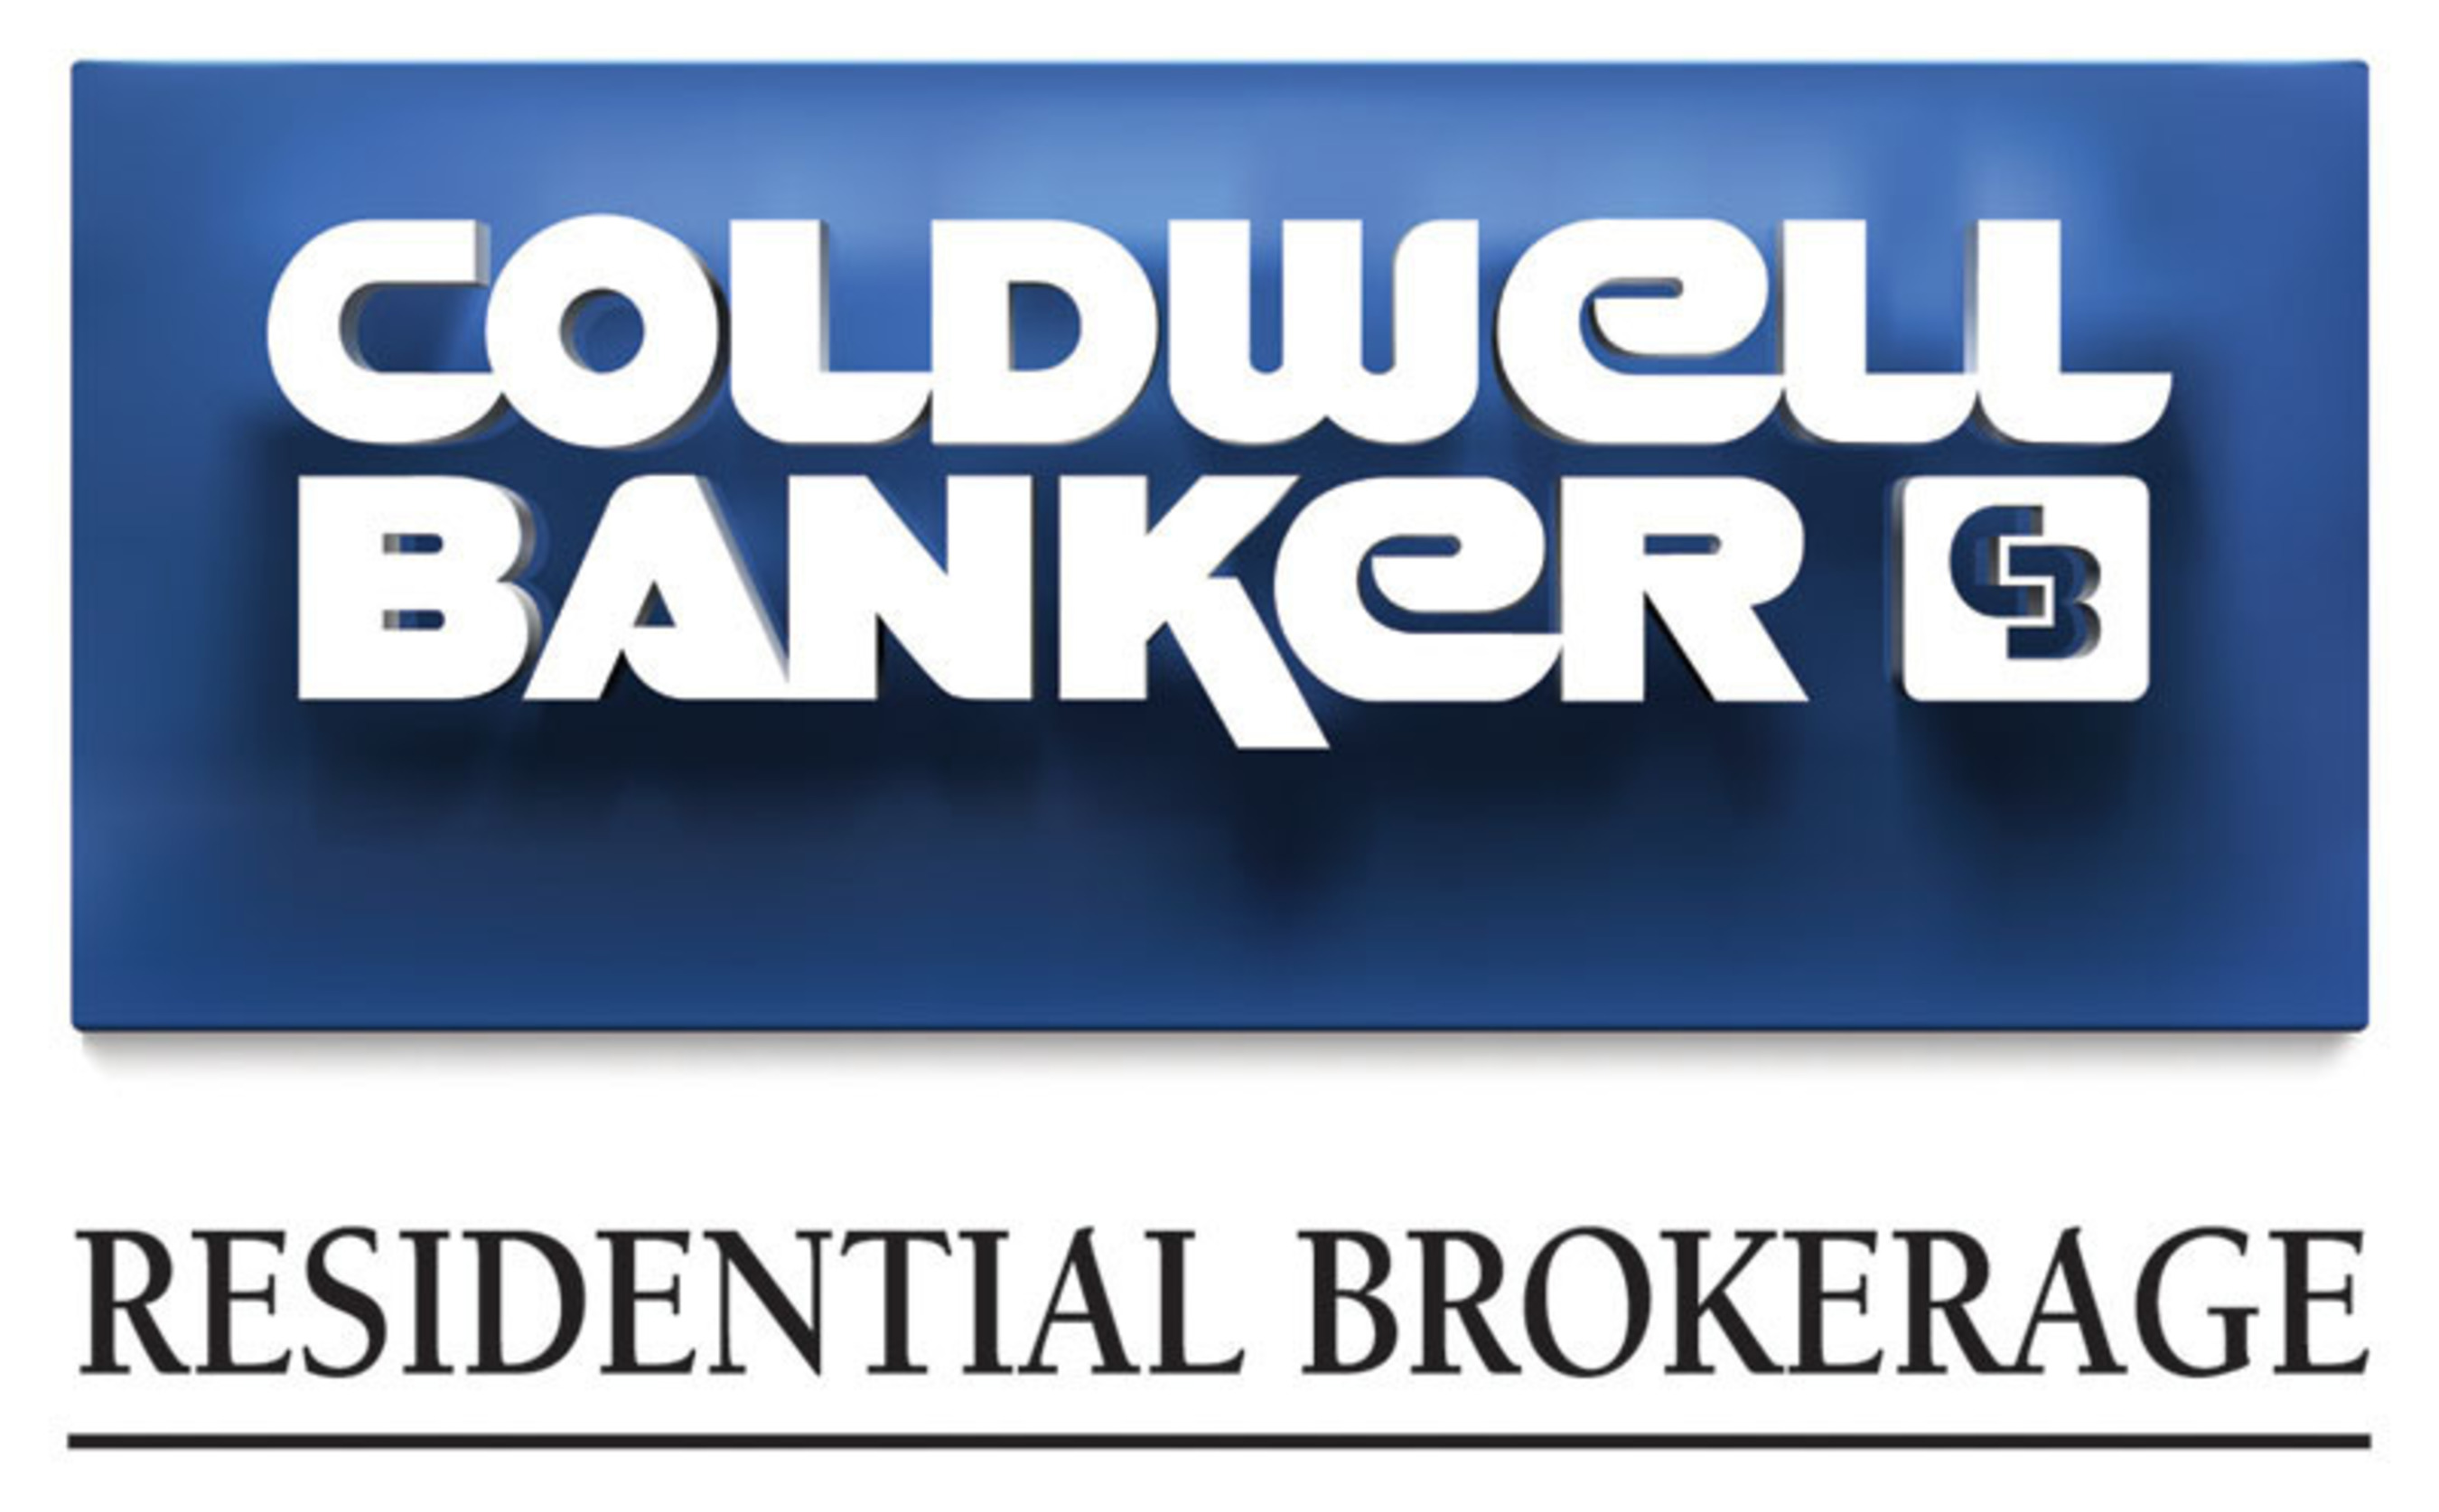 Coldwell Banker Residential Brokerage logo.